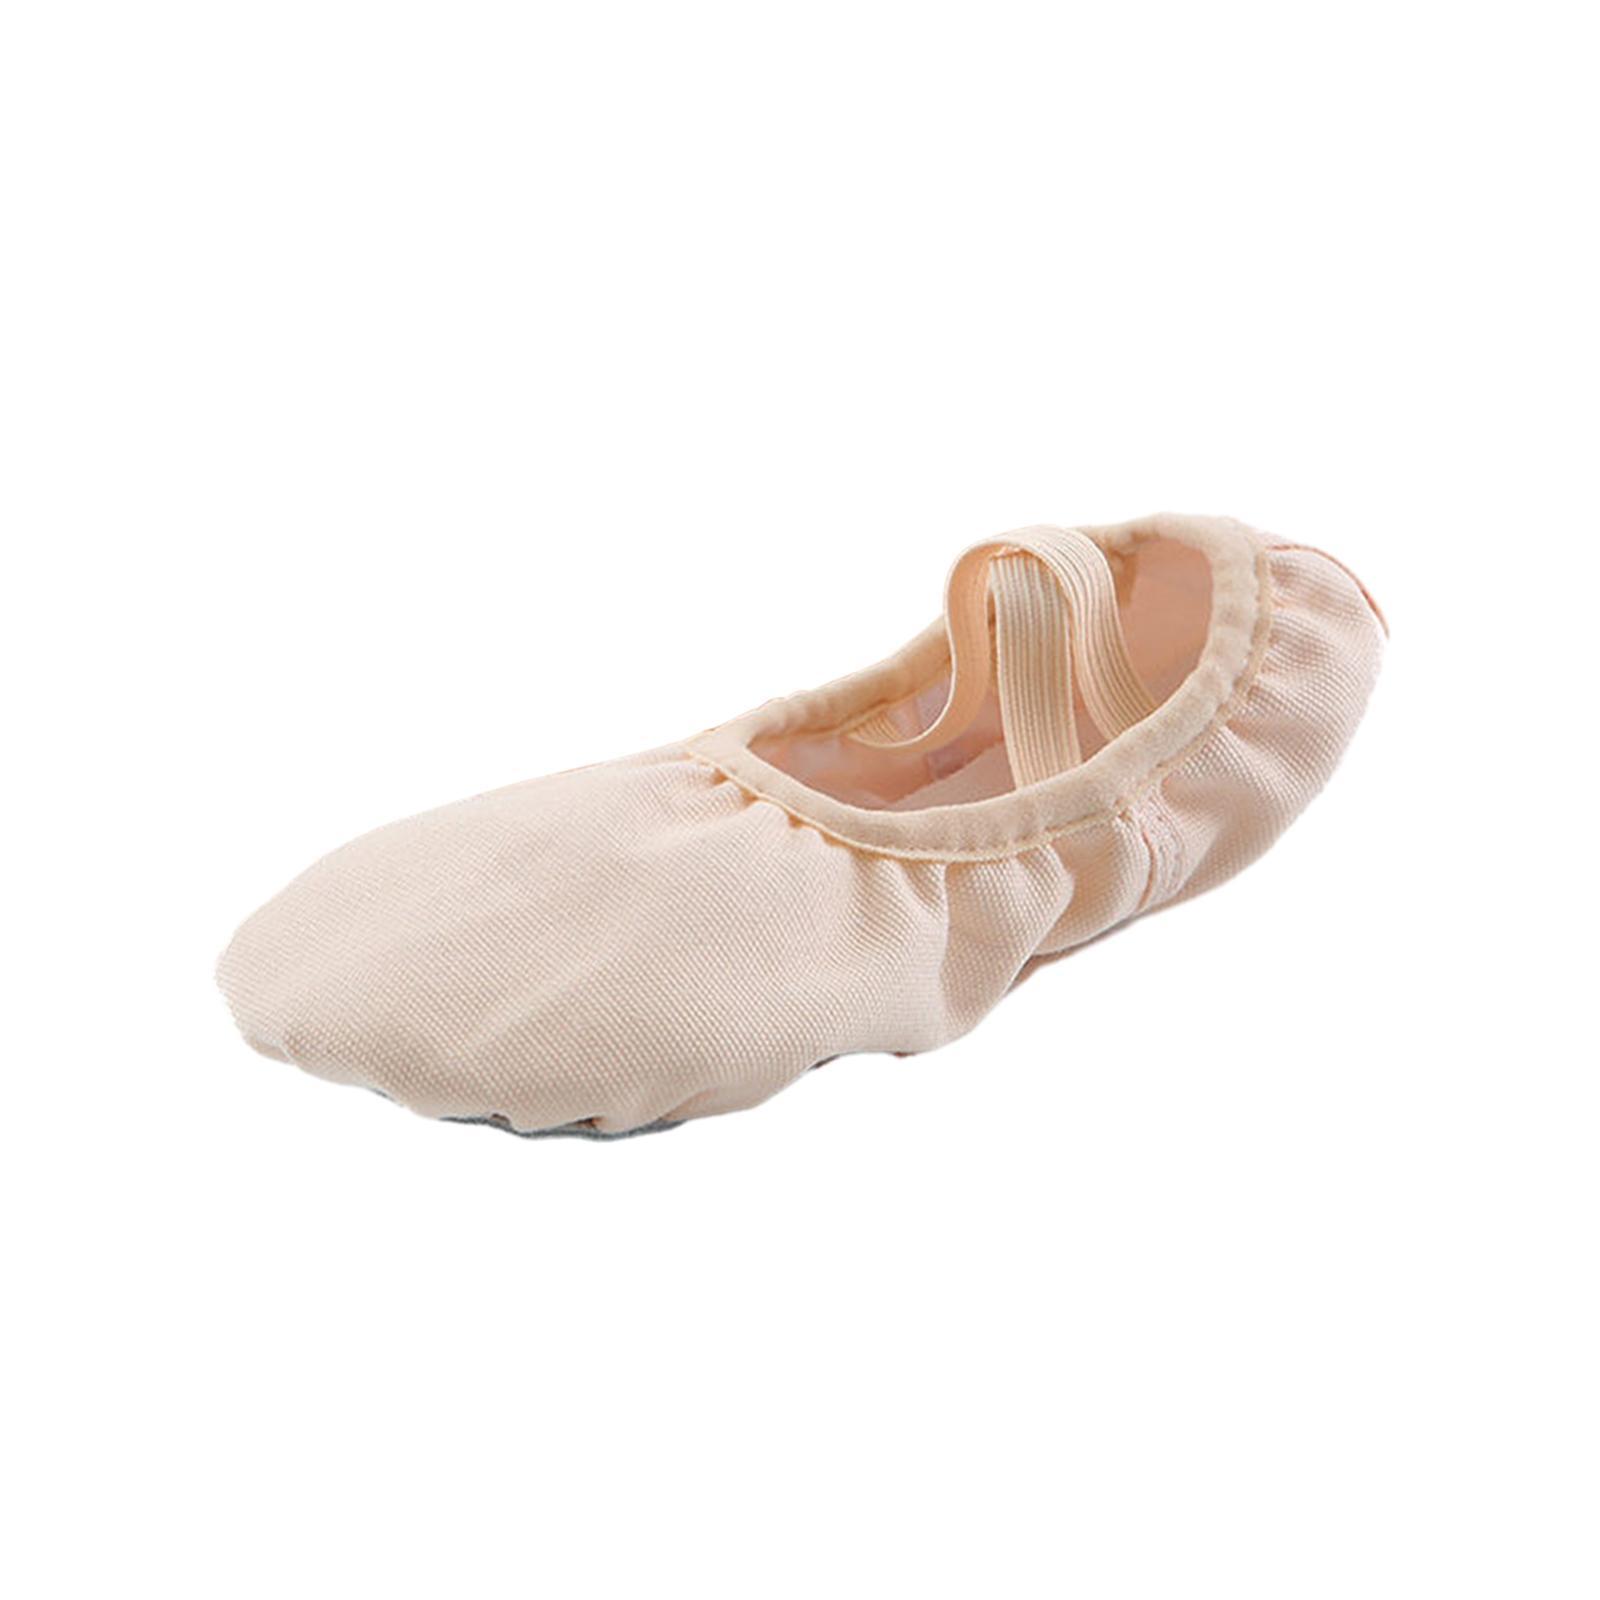 Sports Ballet Shoes for Women Girls, Women's Ballet Slipper Dance Shoes Canvas Ballet Shoes Yoga Shoes